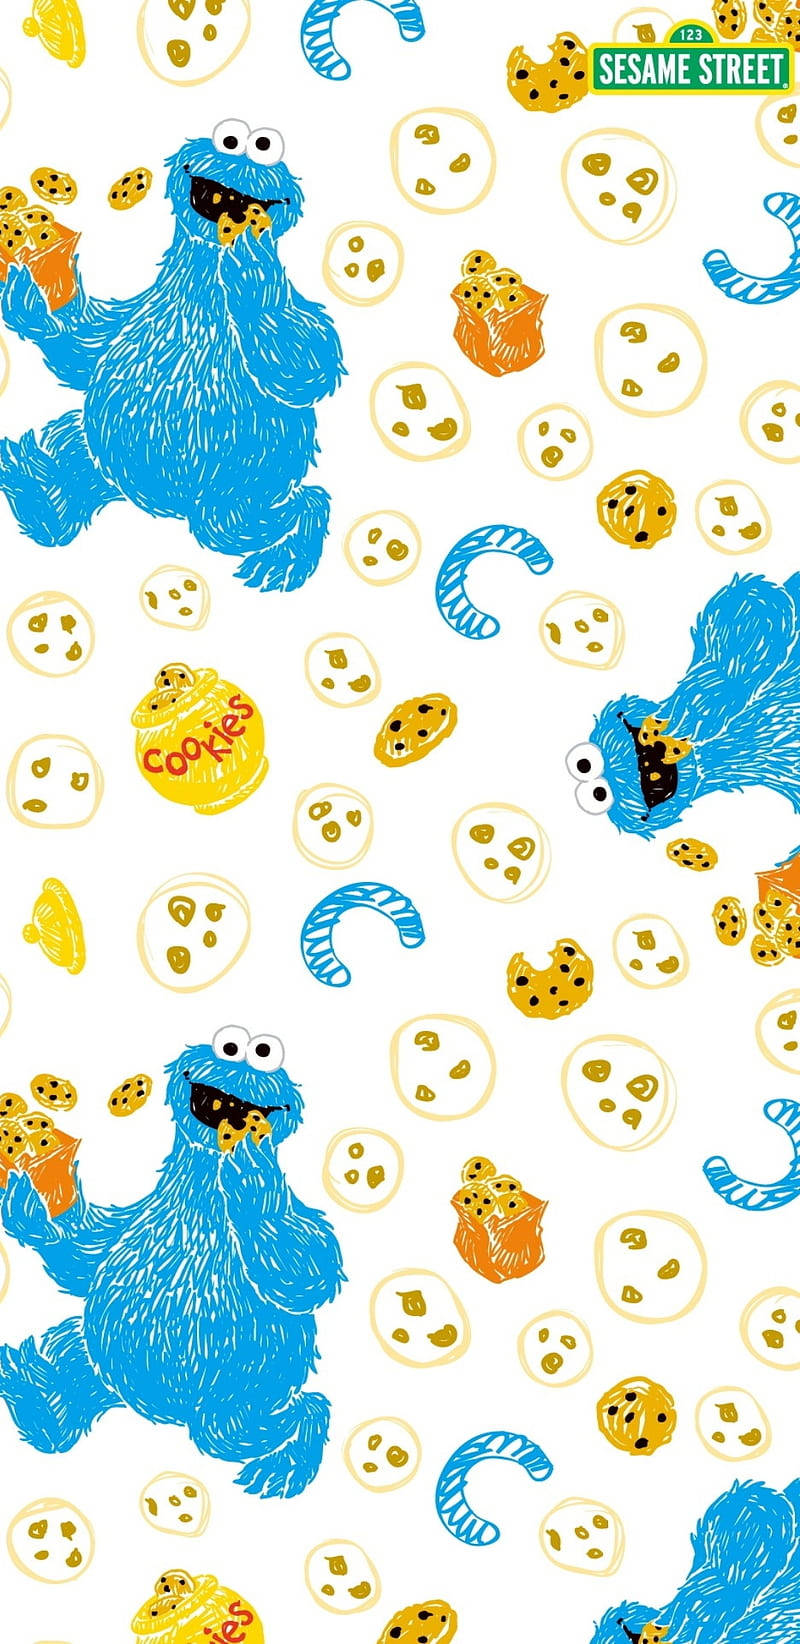 WhatsApp Chat Cookie Monster Wallpaper